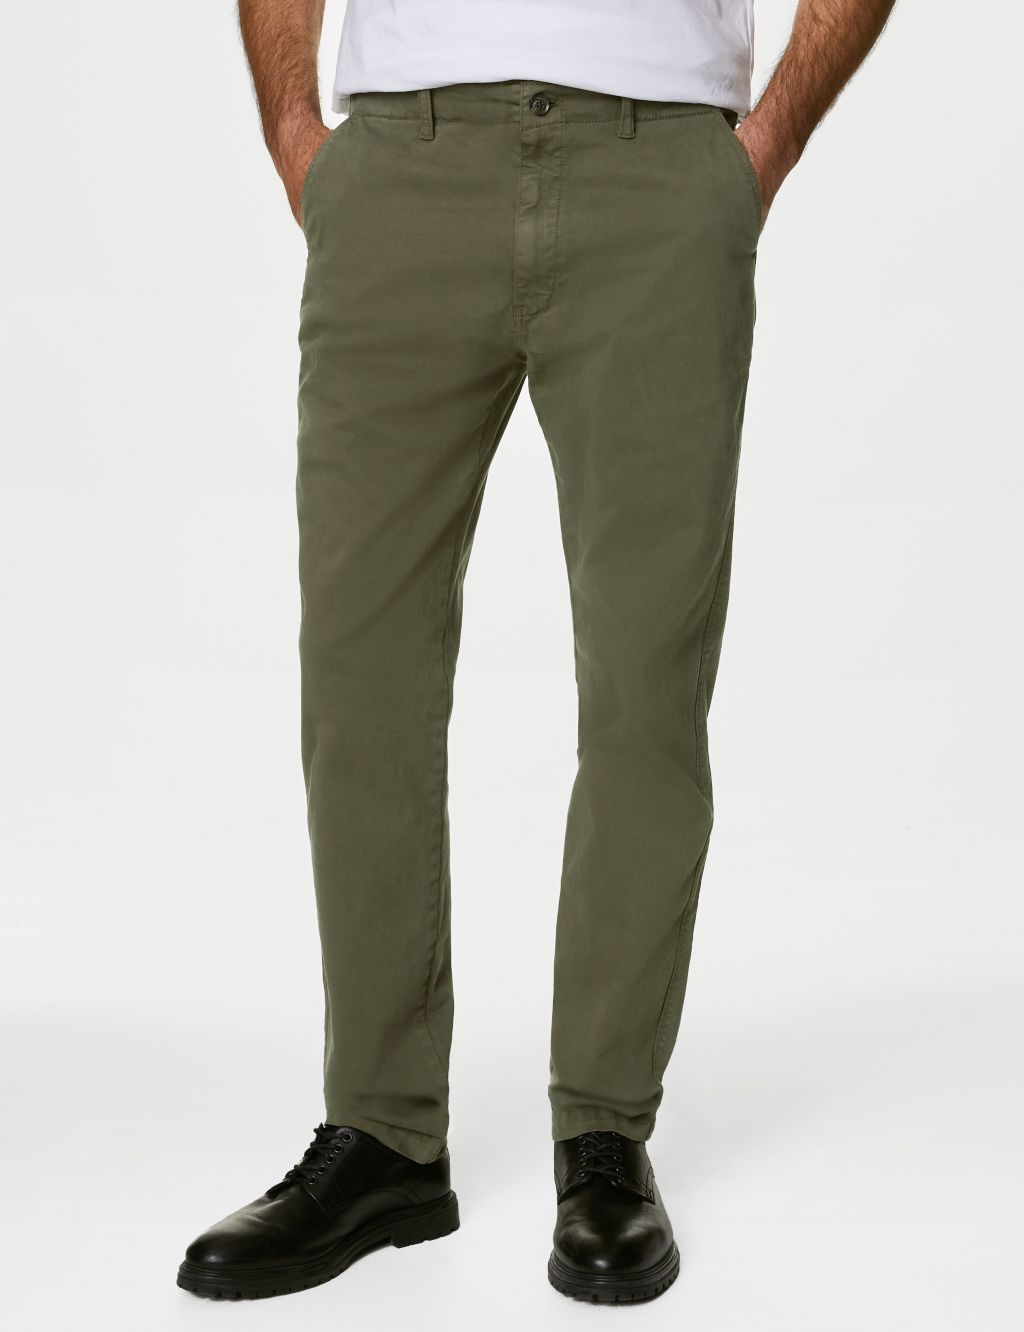 Men's Green Trousers | M&S